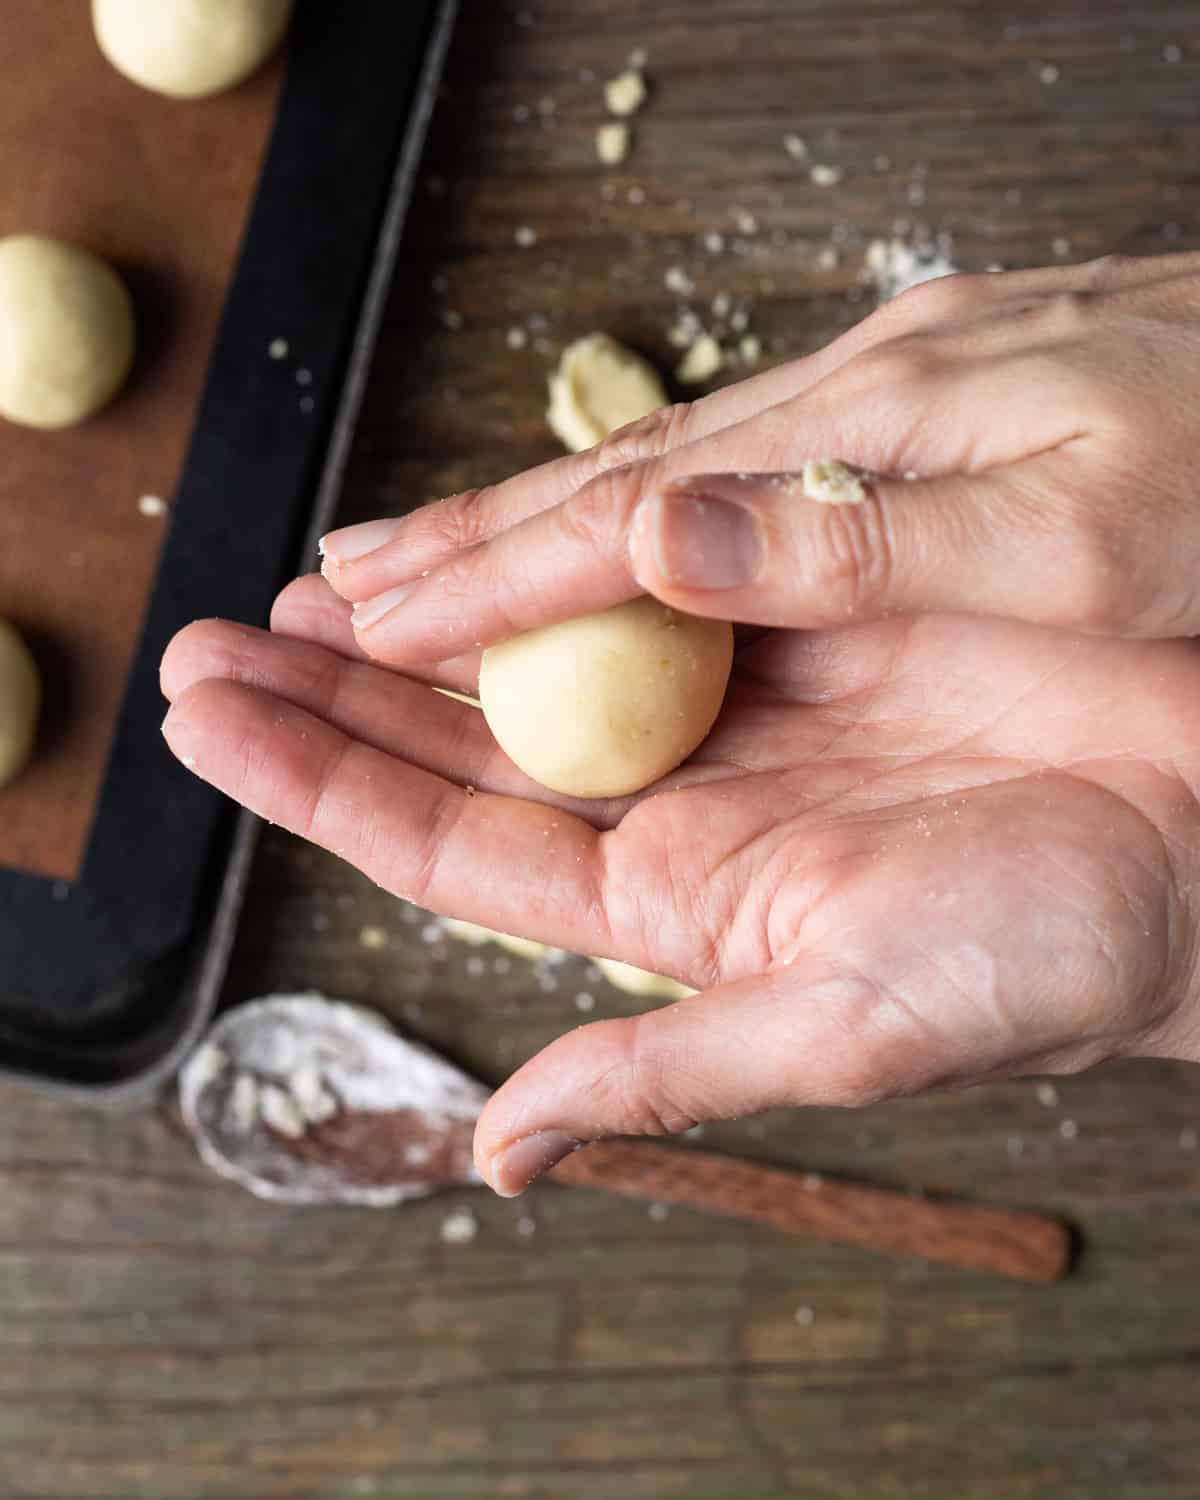 Image of a human hand rolling pao de queijo dough into small balls.